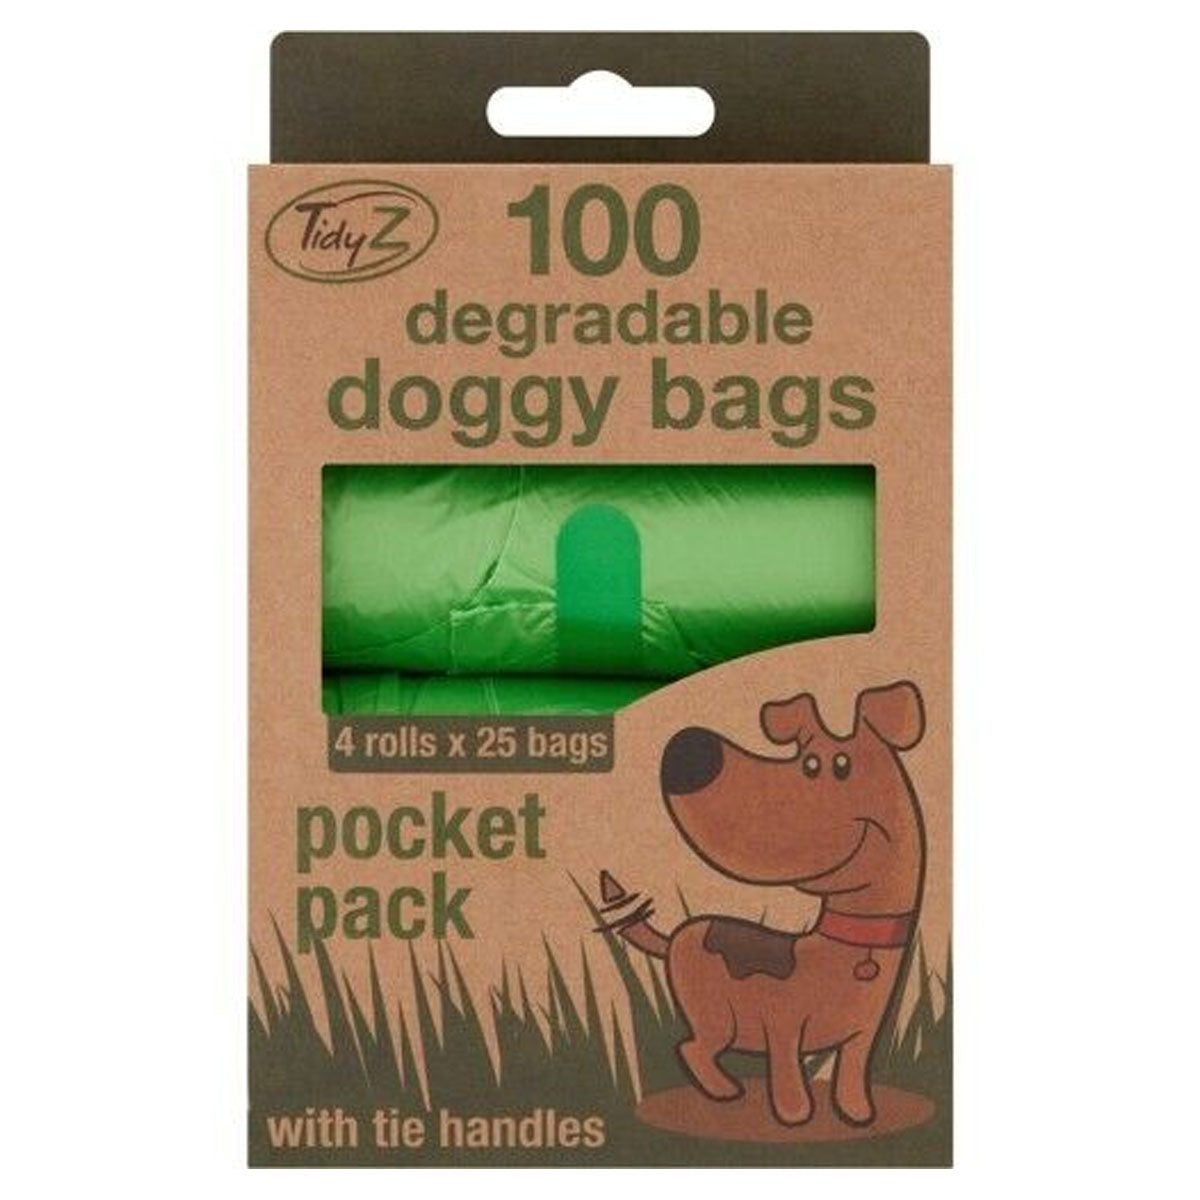 TidyZ - Doggy Poop Bags Degradable Pocket Rolls - 100pcs - Continental Food Store